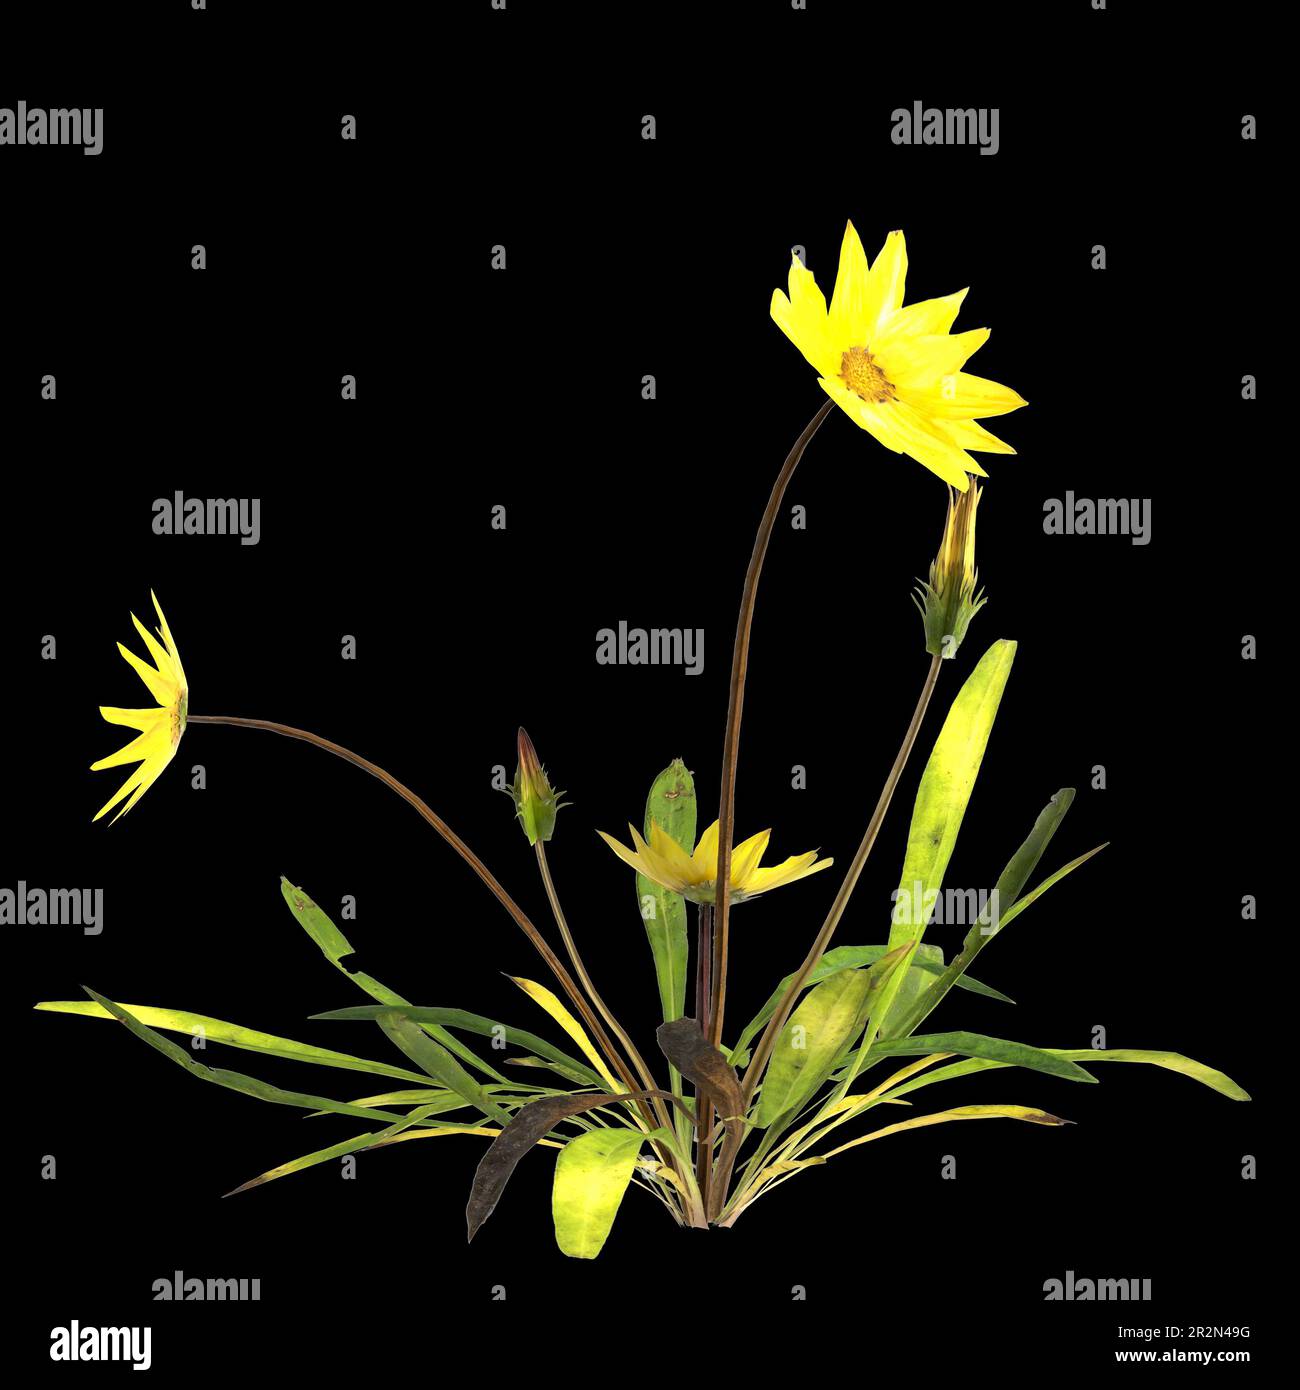 3d illustration of gazania linearis plant isolated on black background Stock Photo